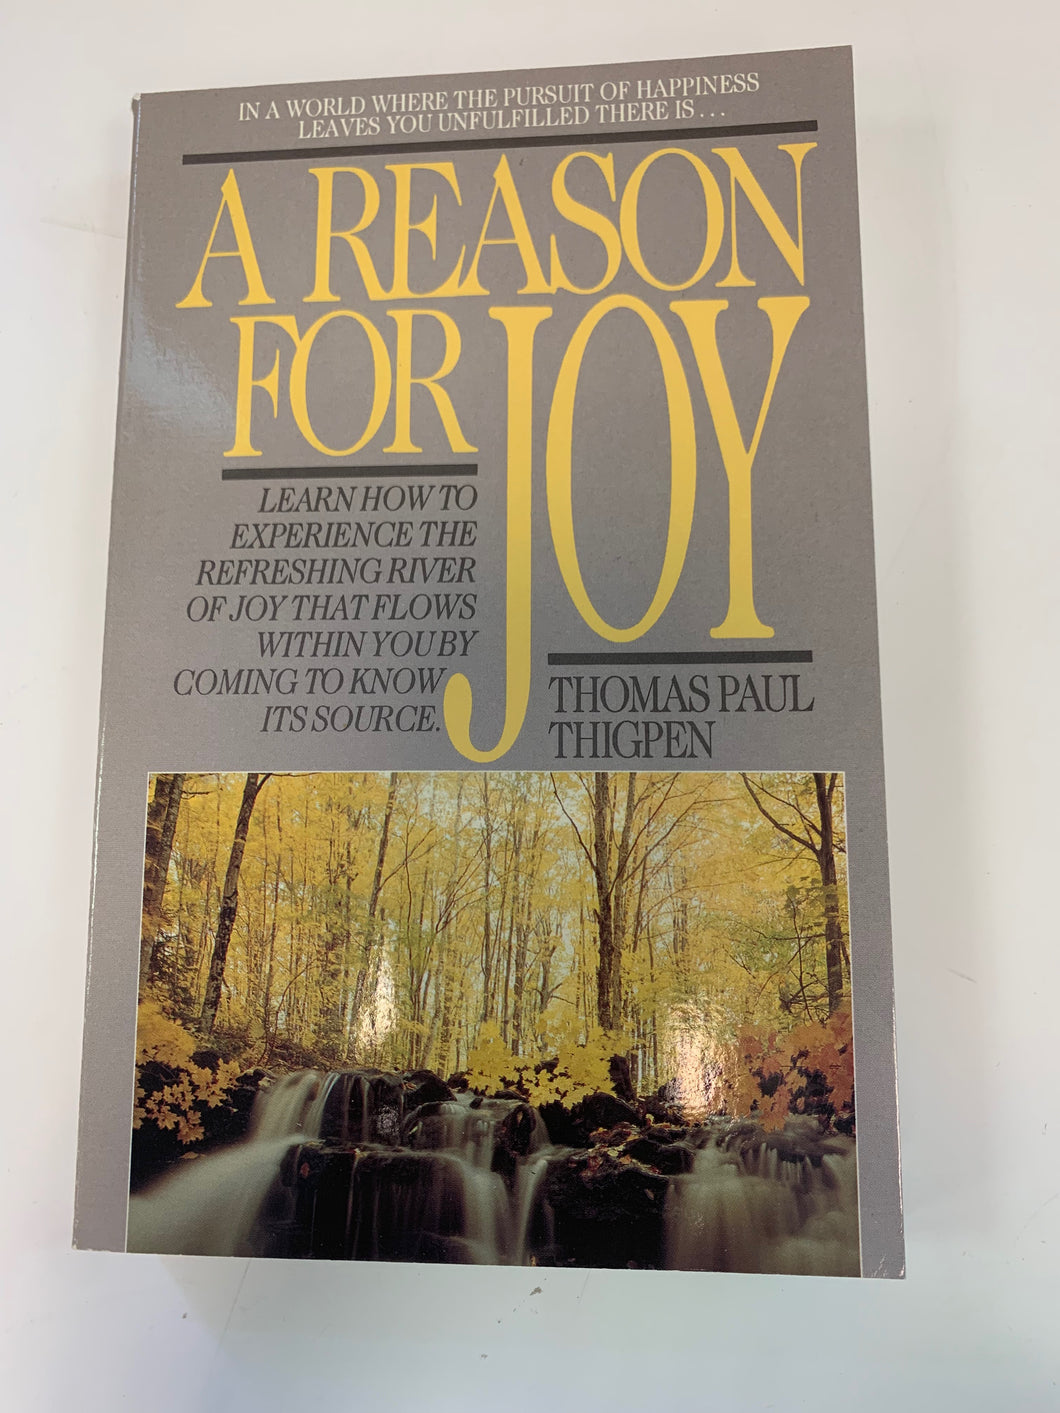 A Reason for Joy by Thomas Paul Thigpen